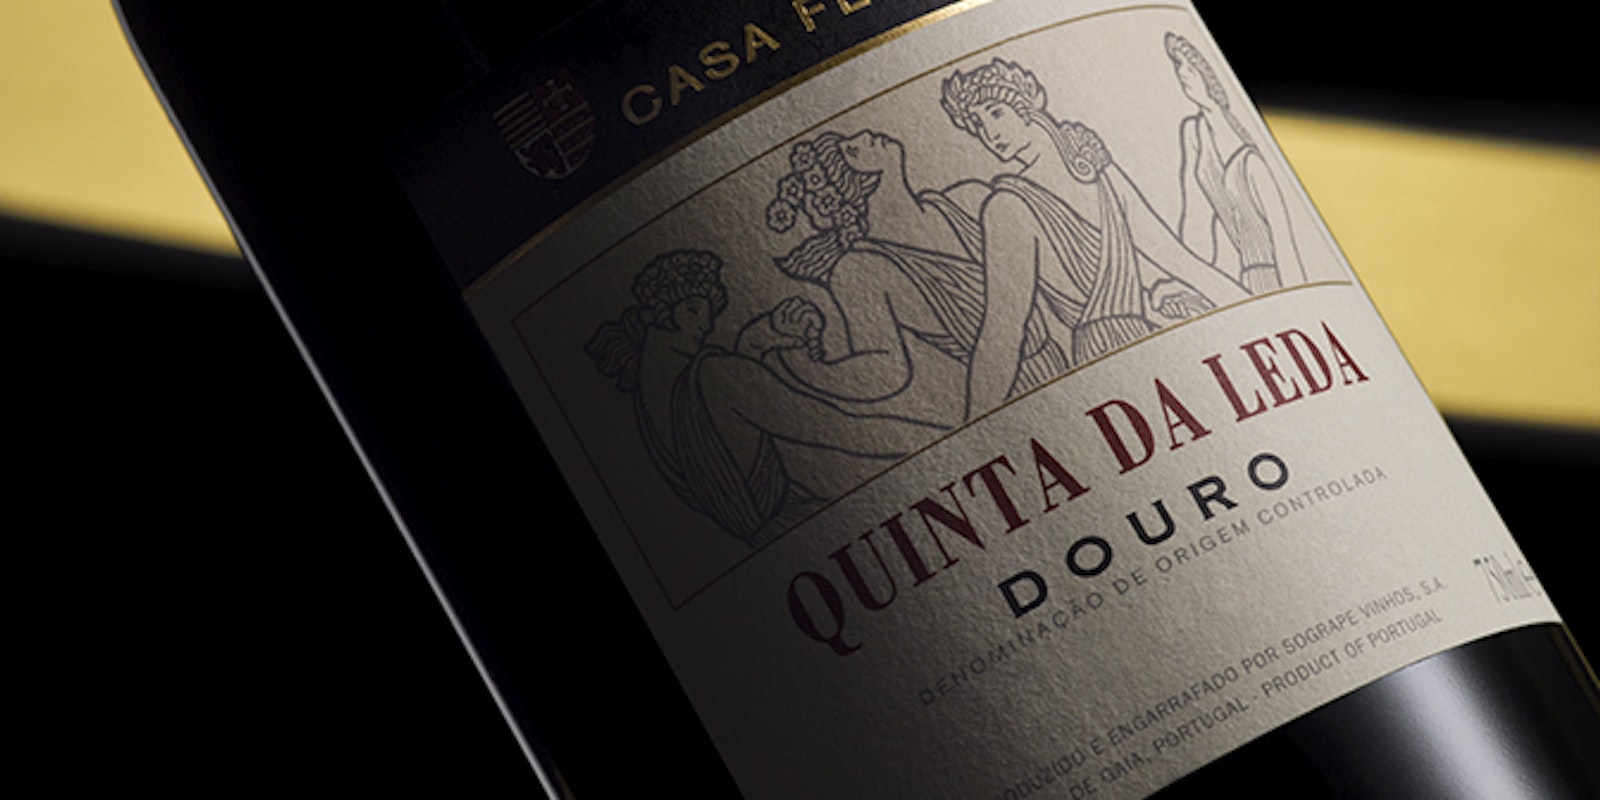 Quinta da Leda wine bottle